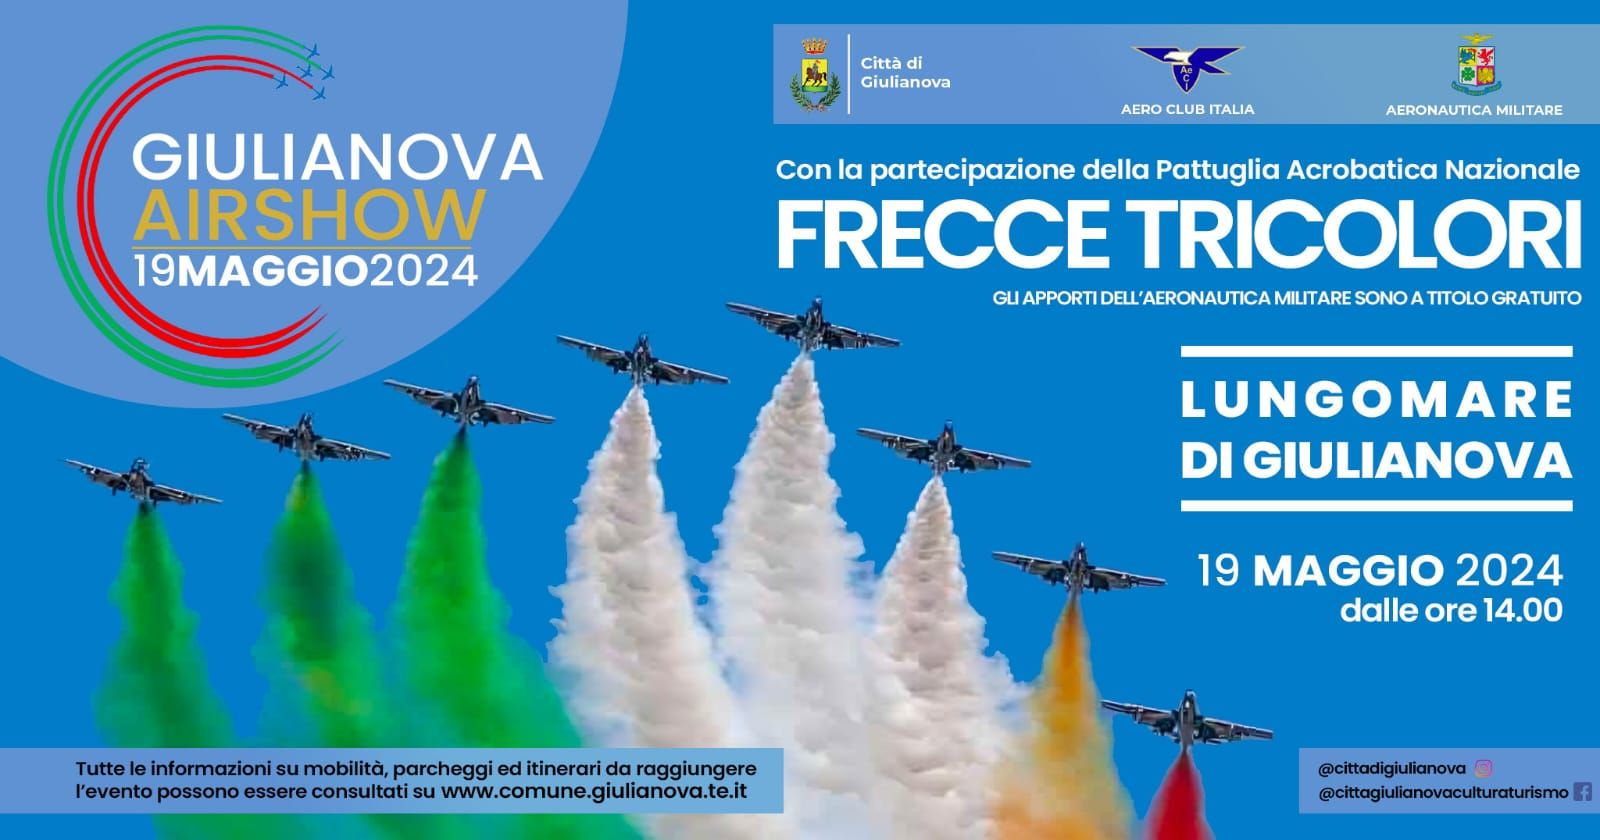 Lungomare di Giulianova 19 mai 2024 Airshow Display